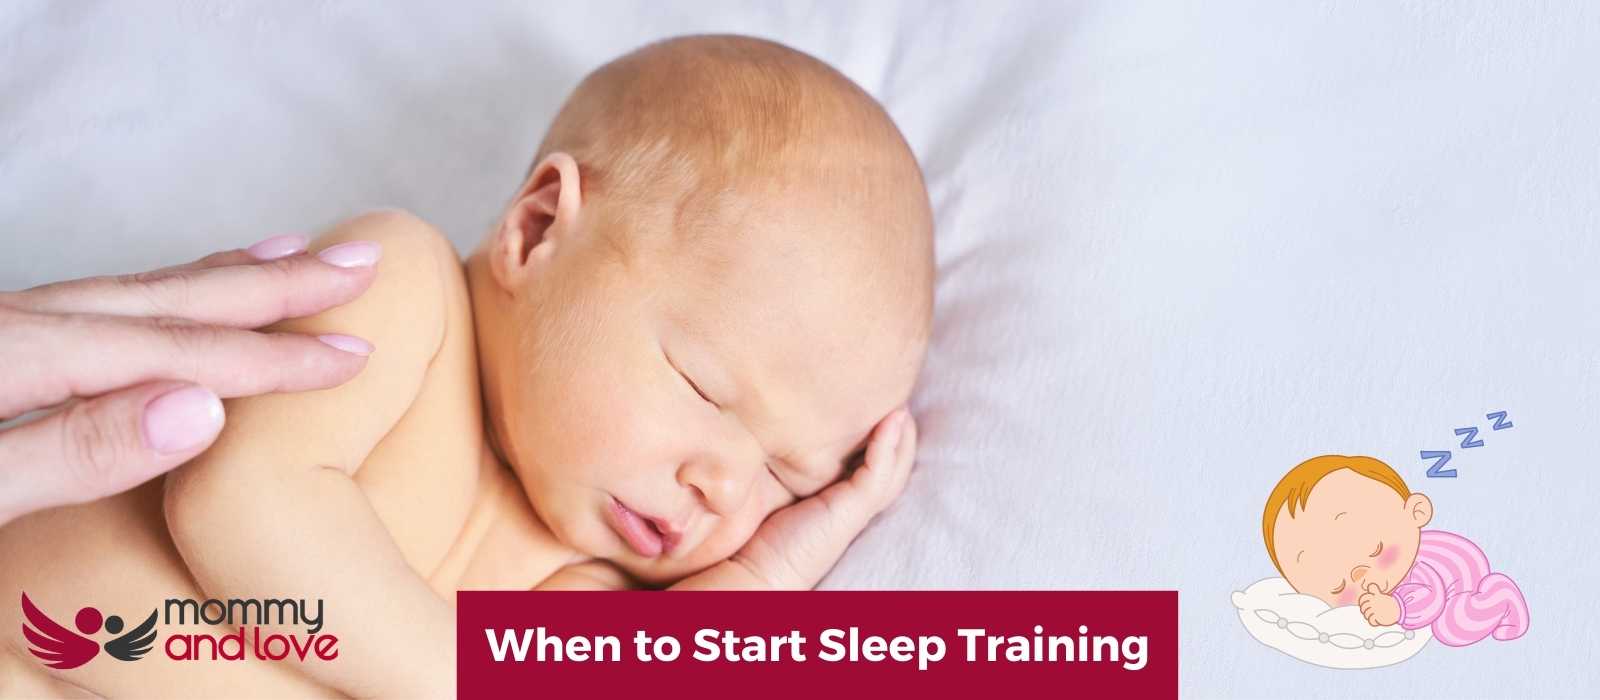 When to Start Sleep Training